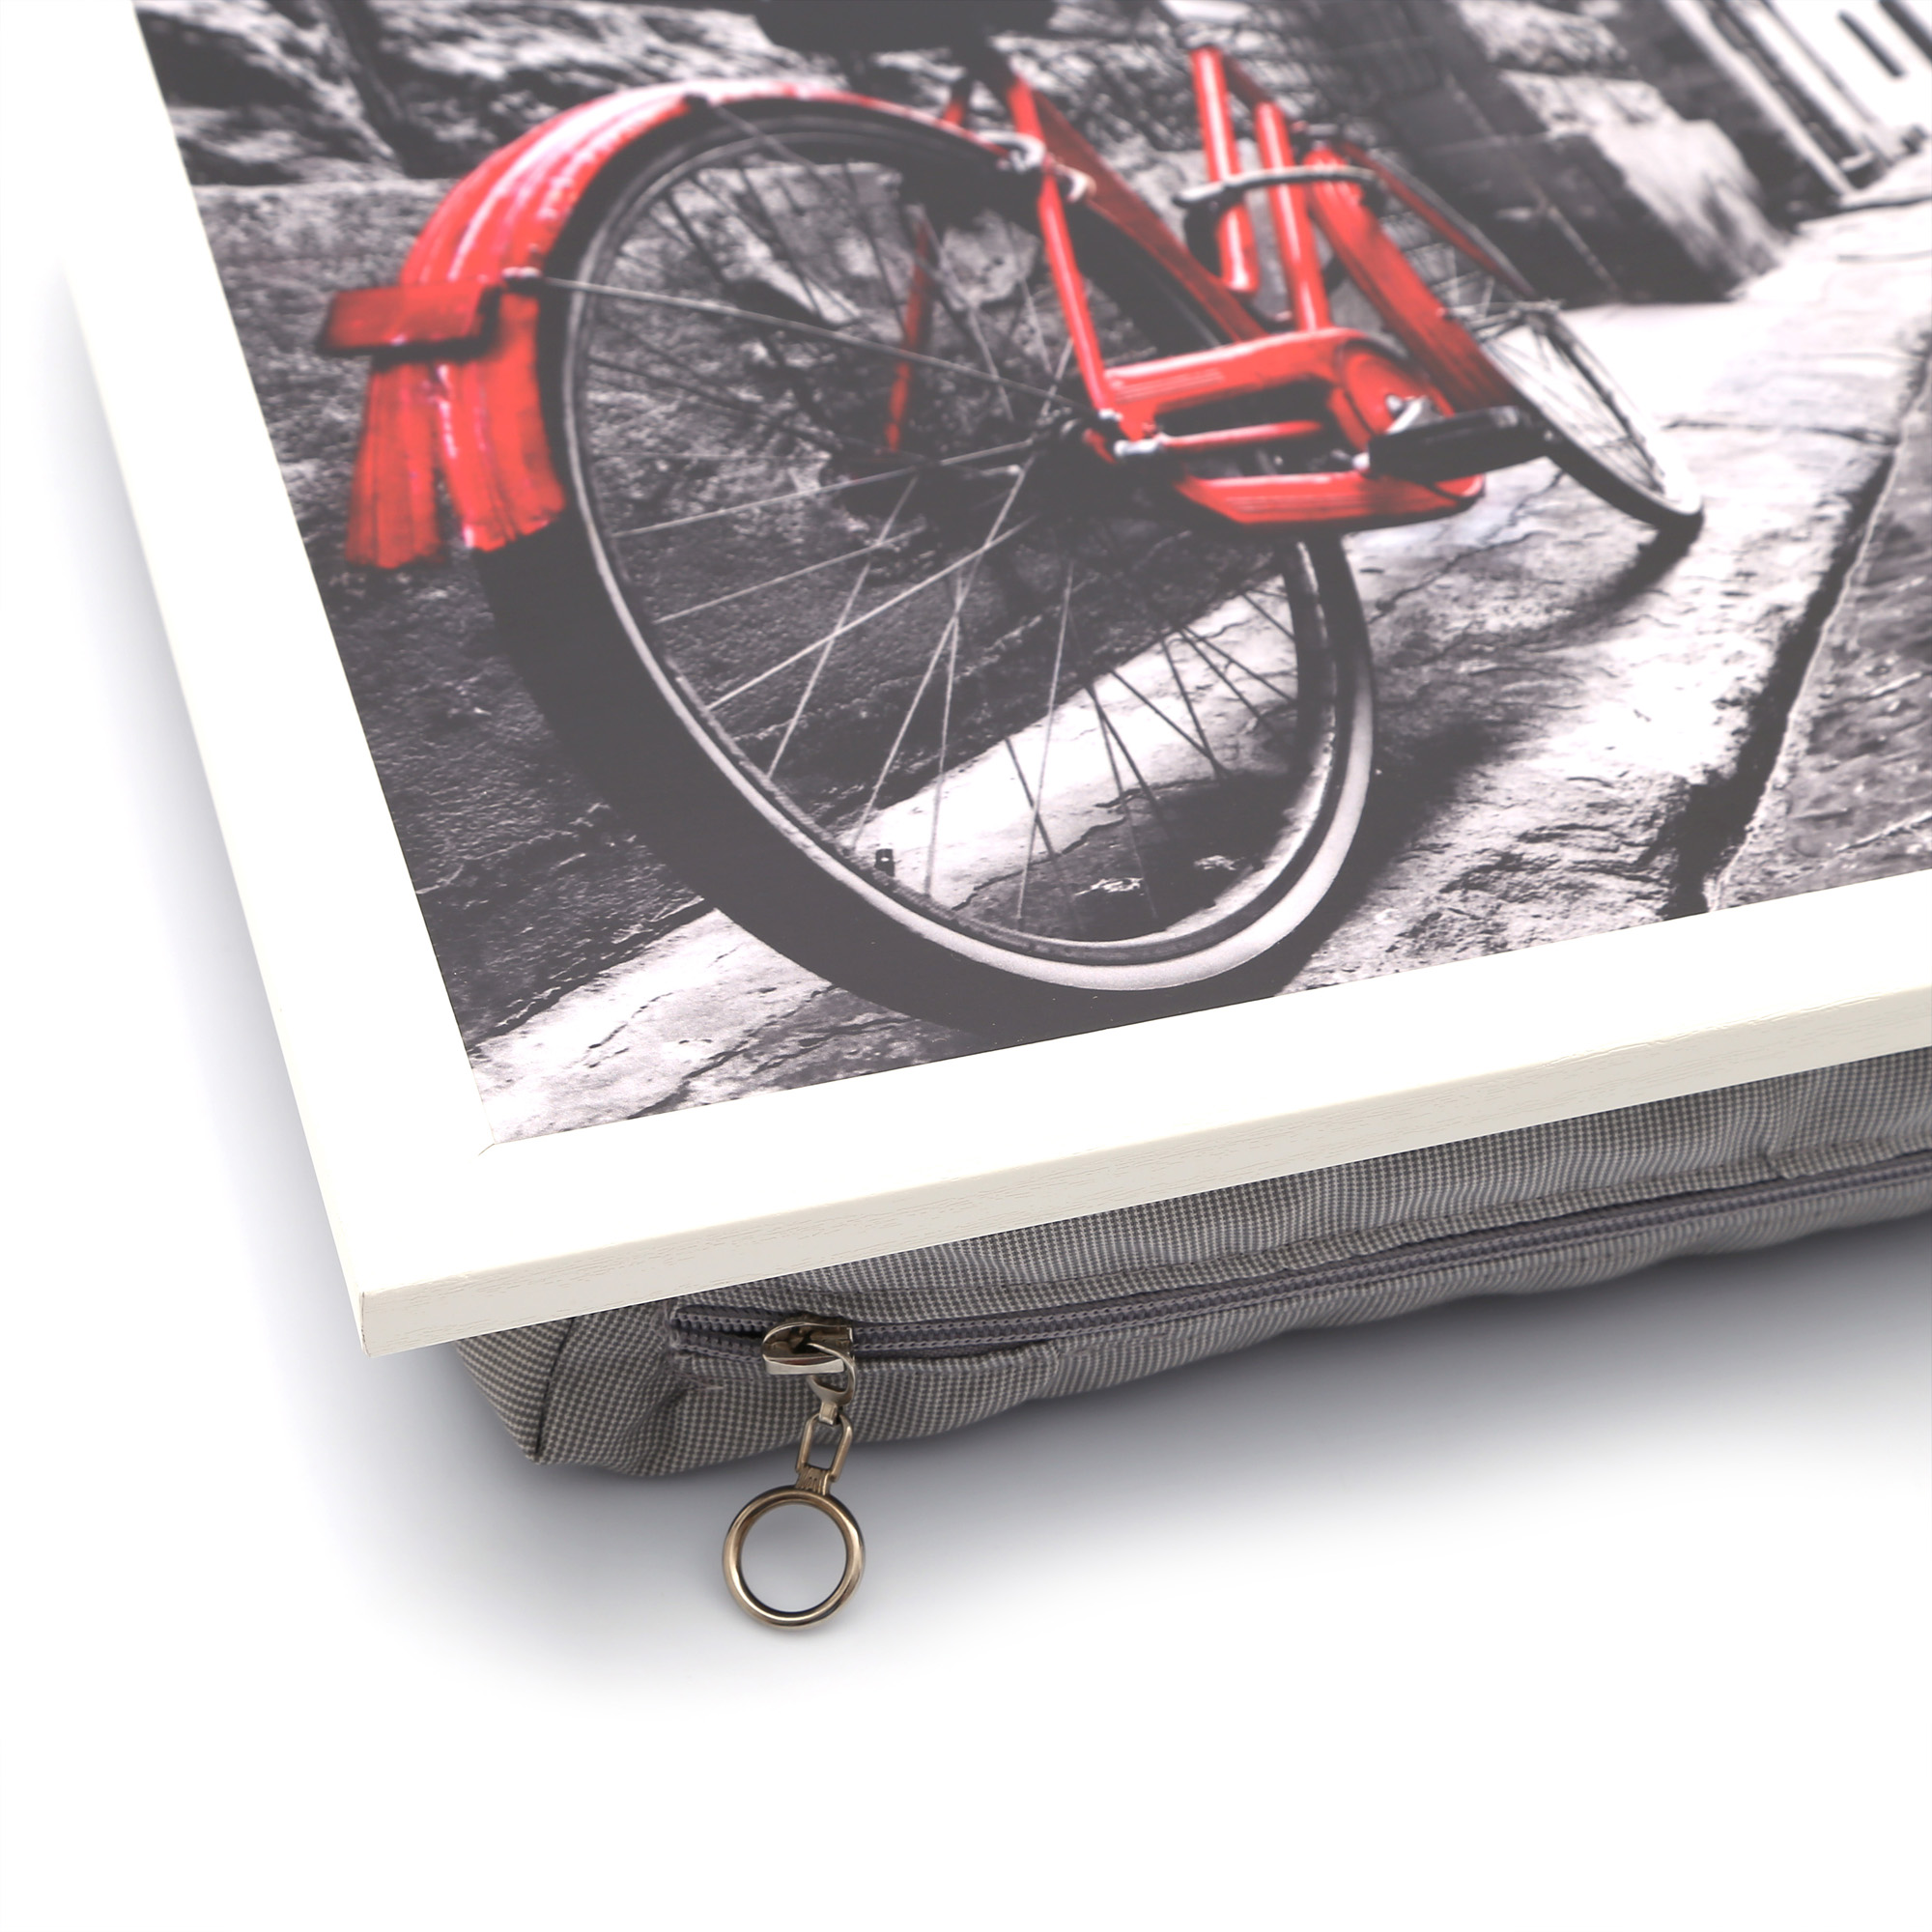 Yedi Home&Decor Concept Keyif Tepsisi-Red Bike Yeni Dizayn